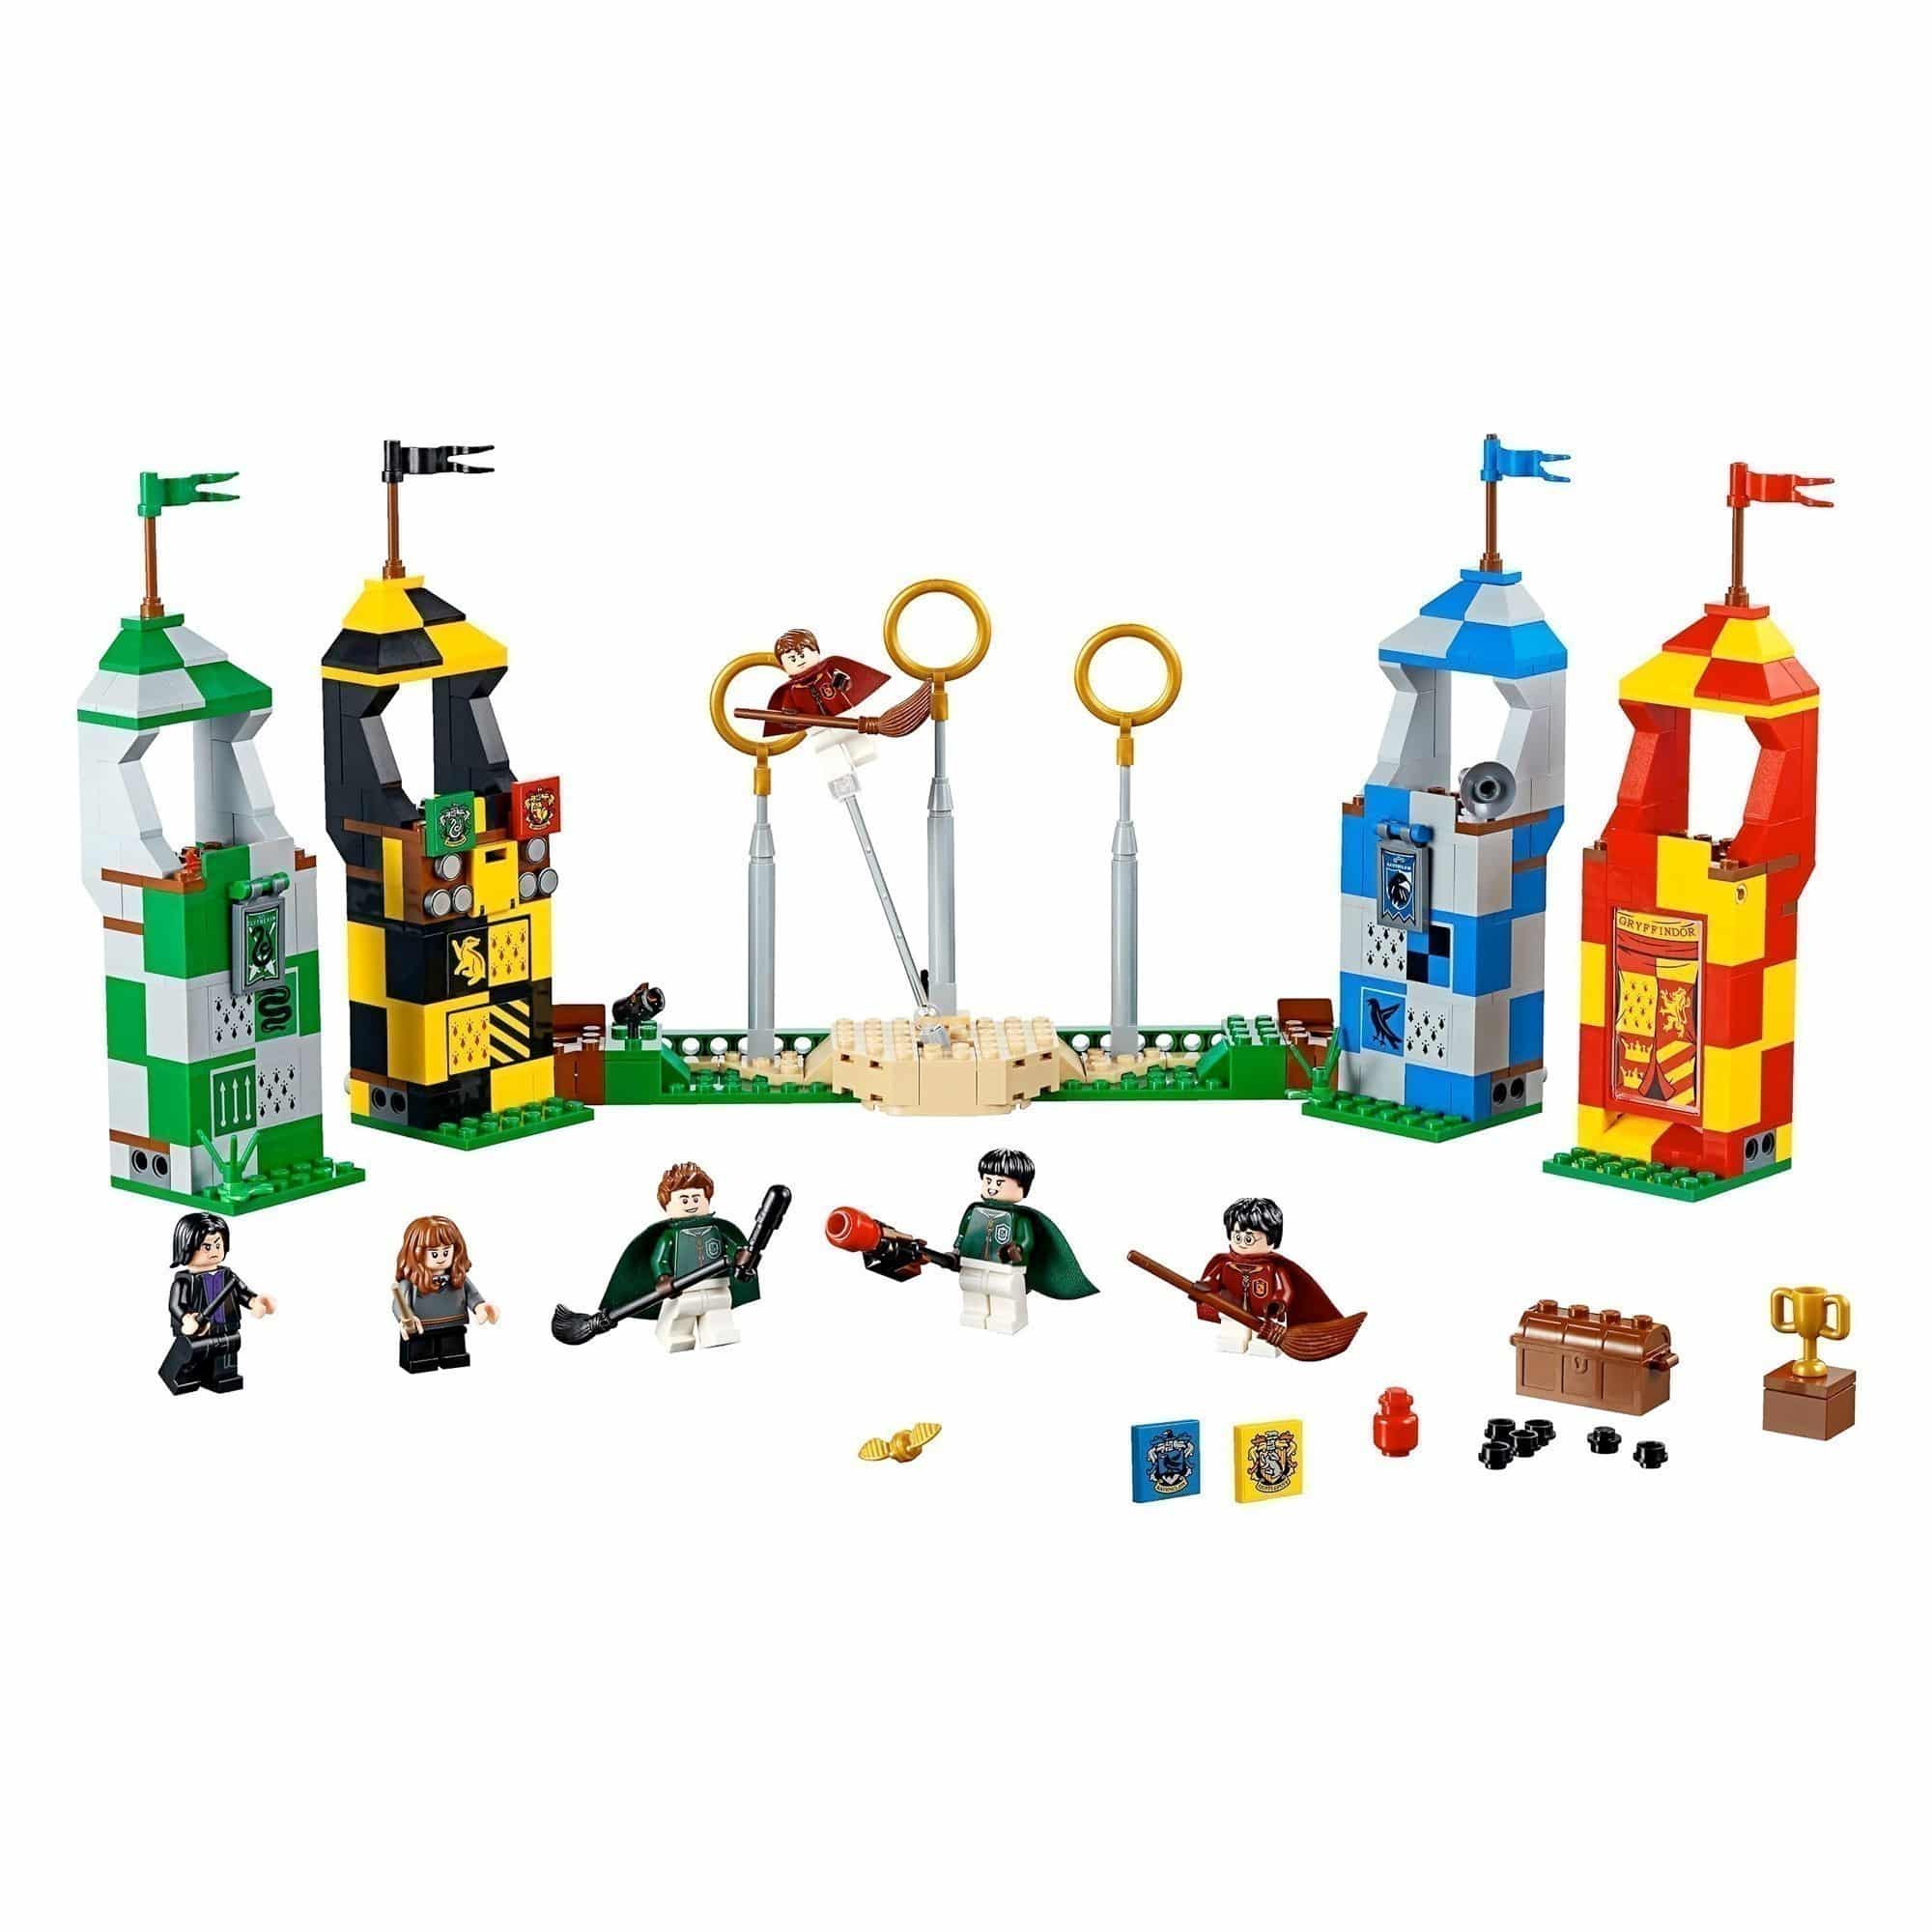 LEGO® - Harry Potter™ - 75956 Quidditch™ Match